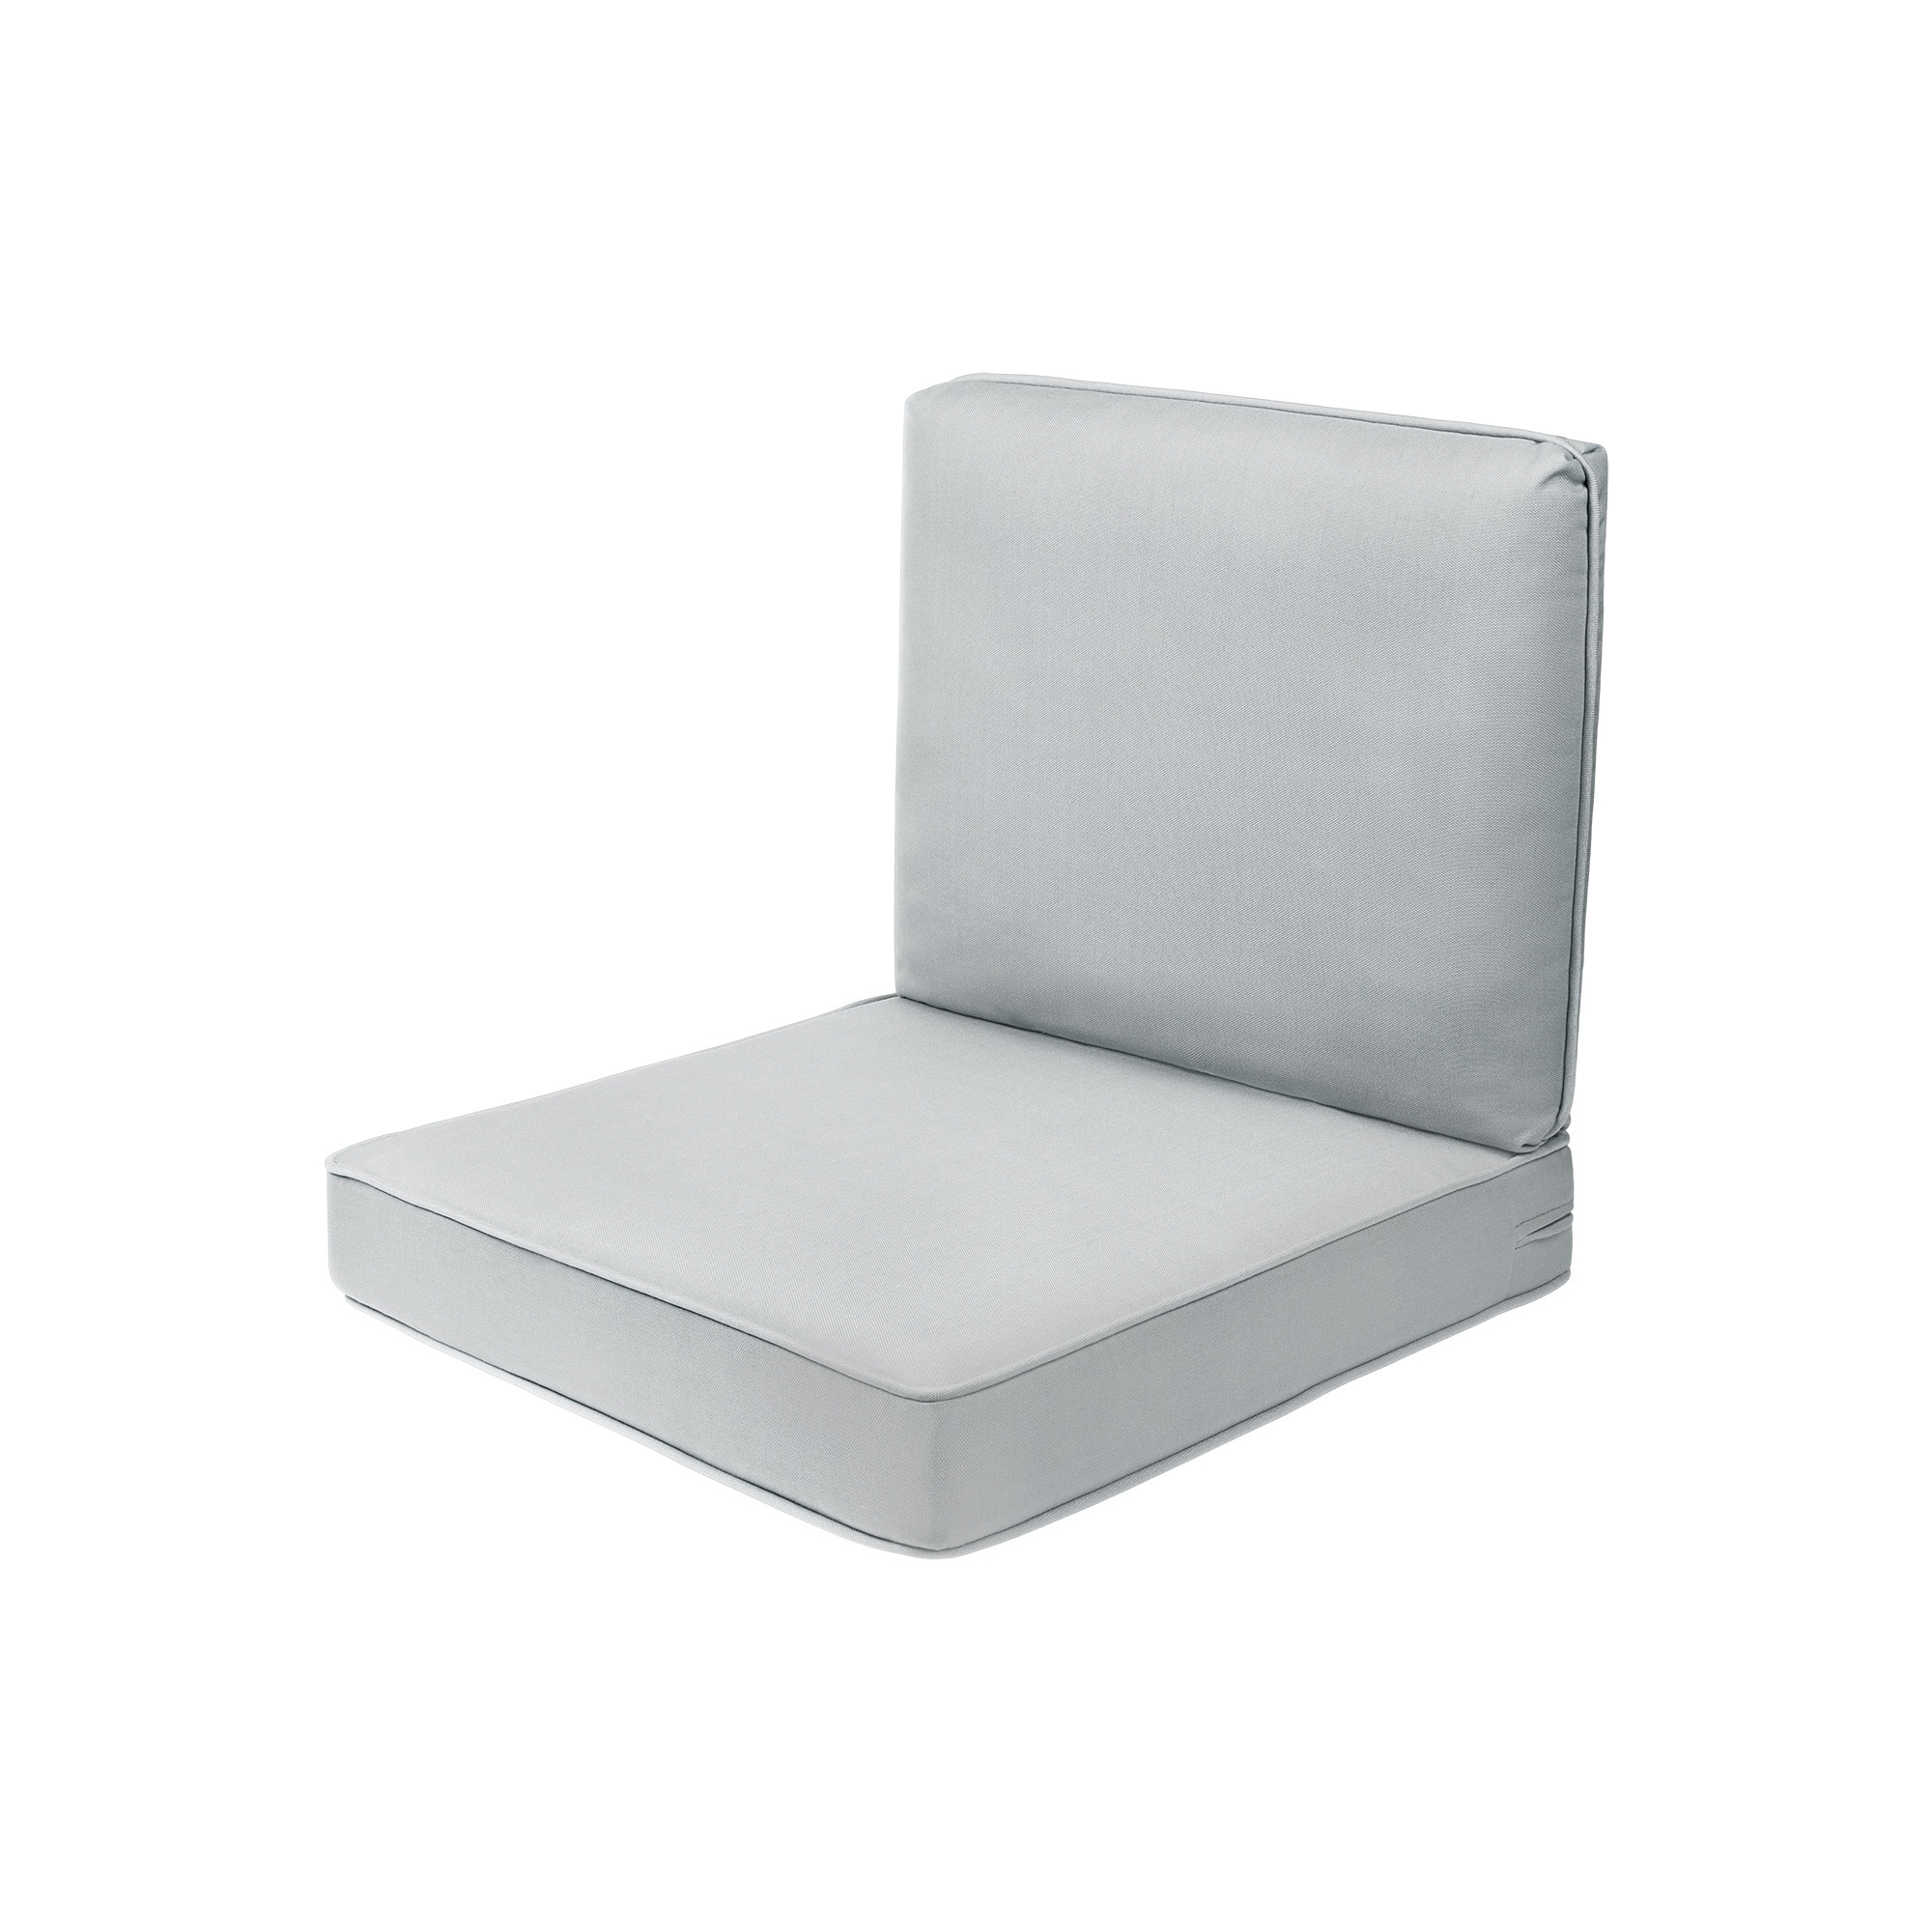 BLISSWALK Outdoor Deep Seat Cushion Set 24x24&22x24, Lounge Chair Loveseats Cushions for Patio Furniture Beige